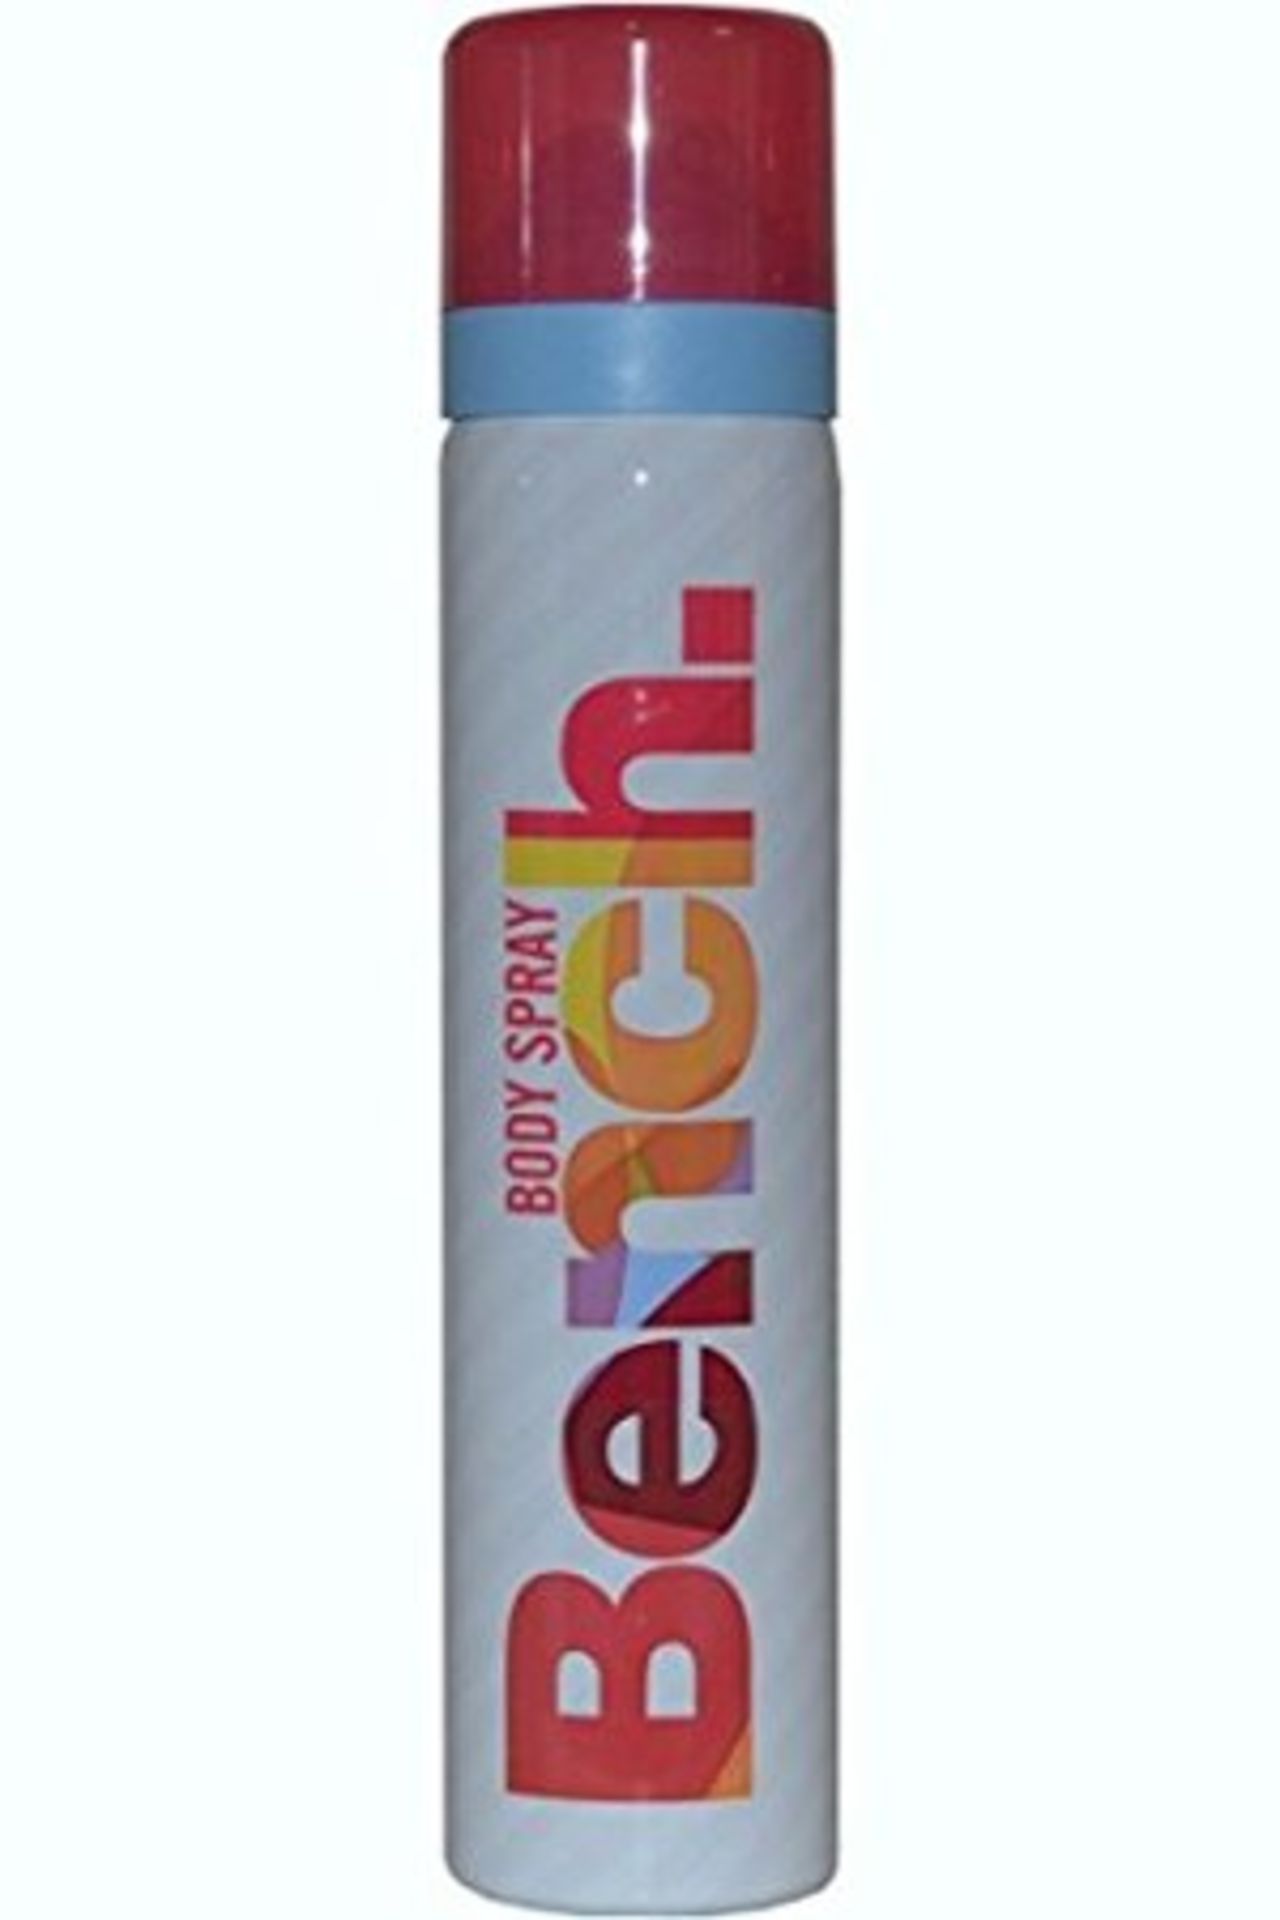 V Brand New Twelve Bench For Her Body Spray 75 ml. Tesco Direct price £49.44 X 2 YOUR BID PRICE TO